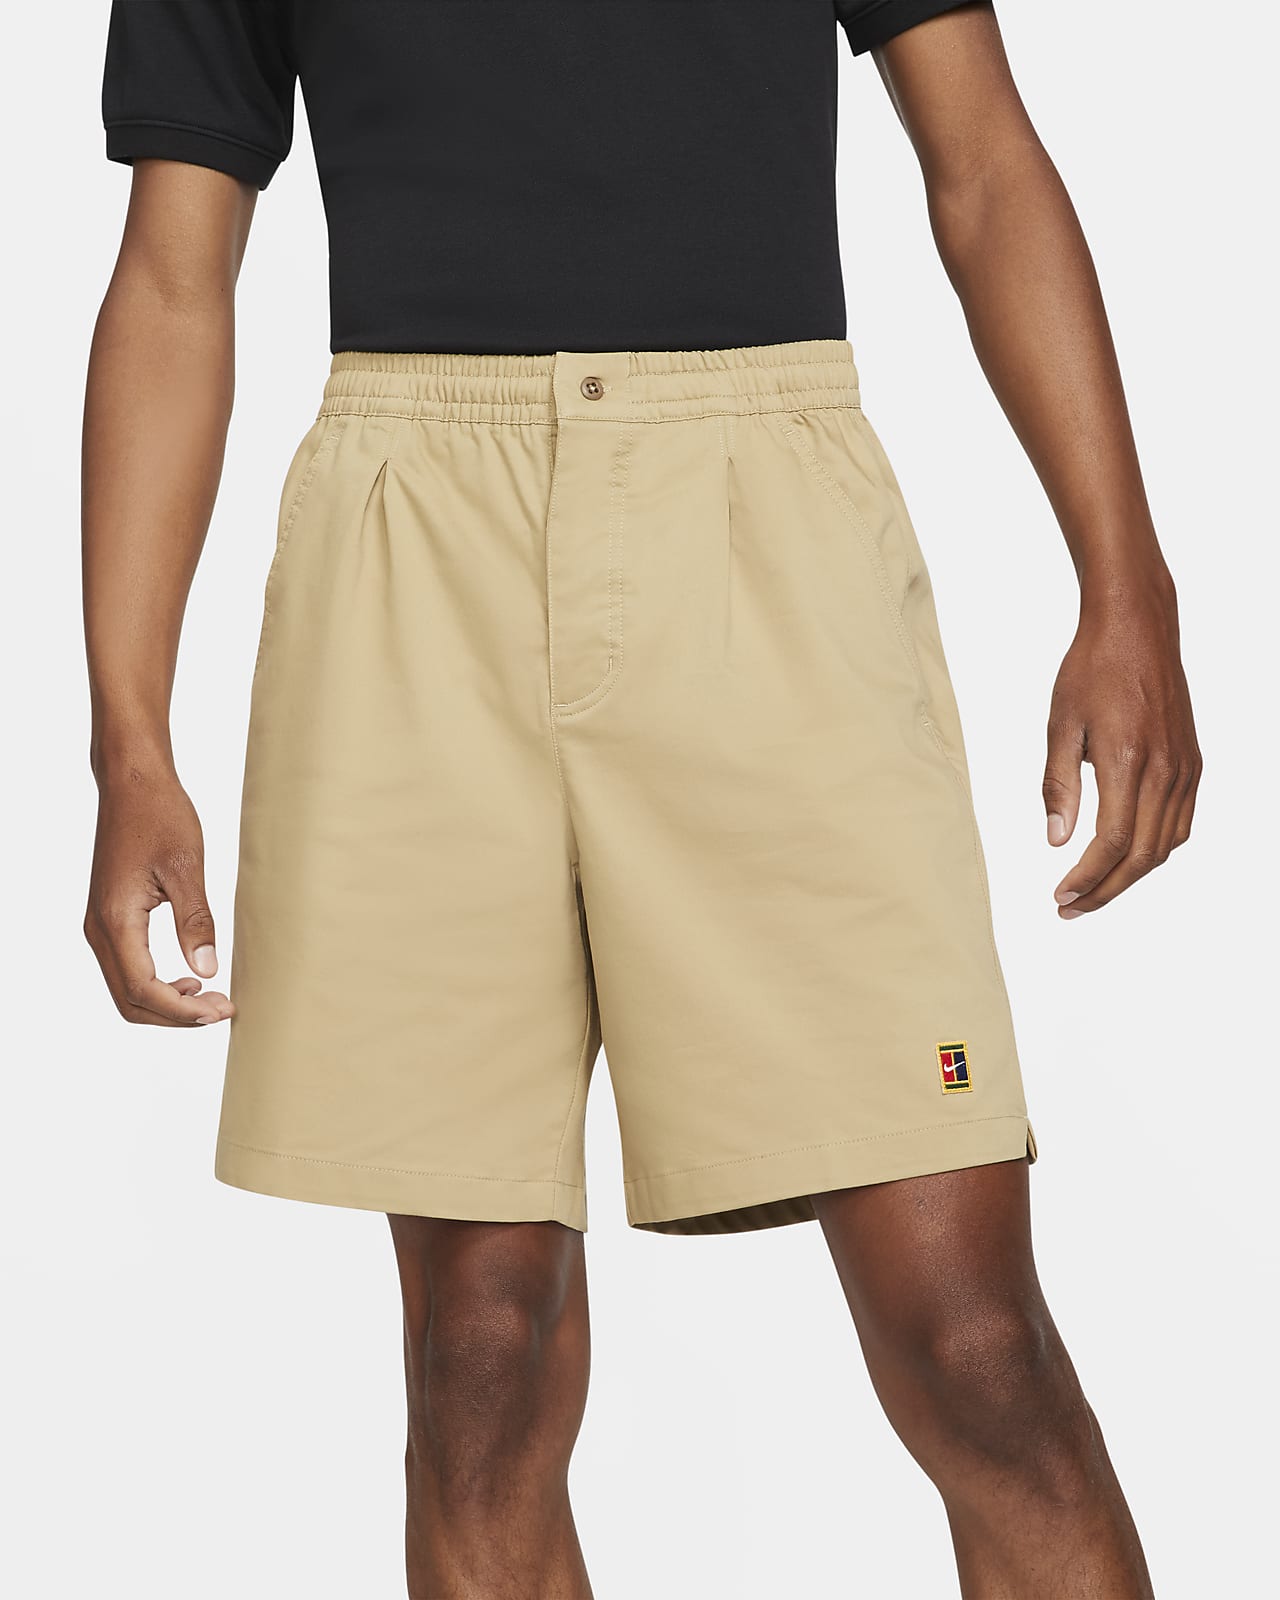 nike mens tennis shorts